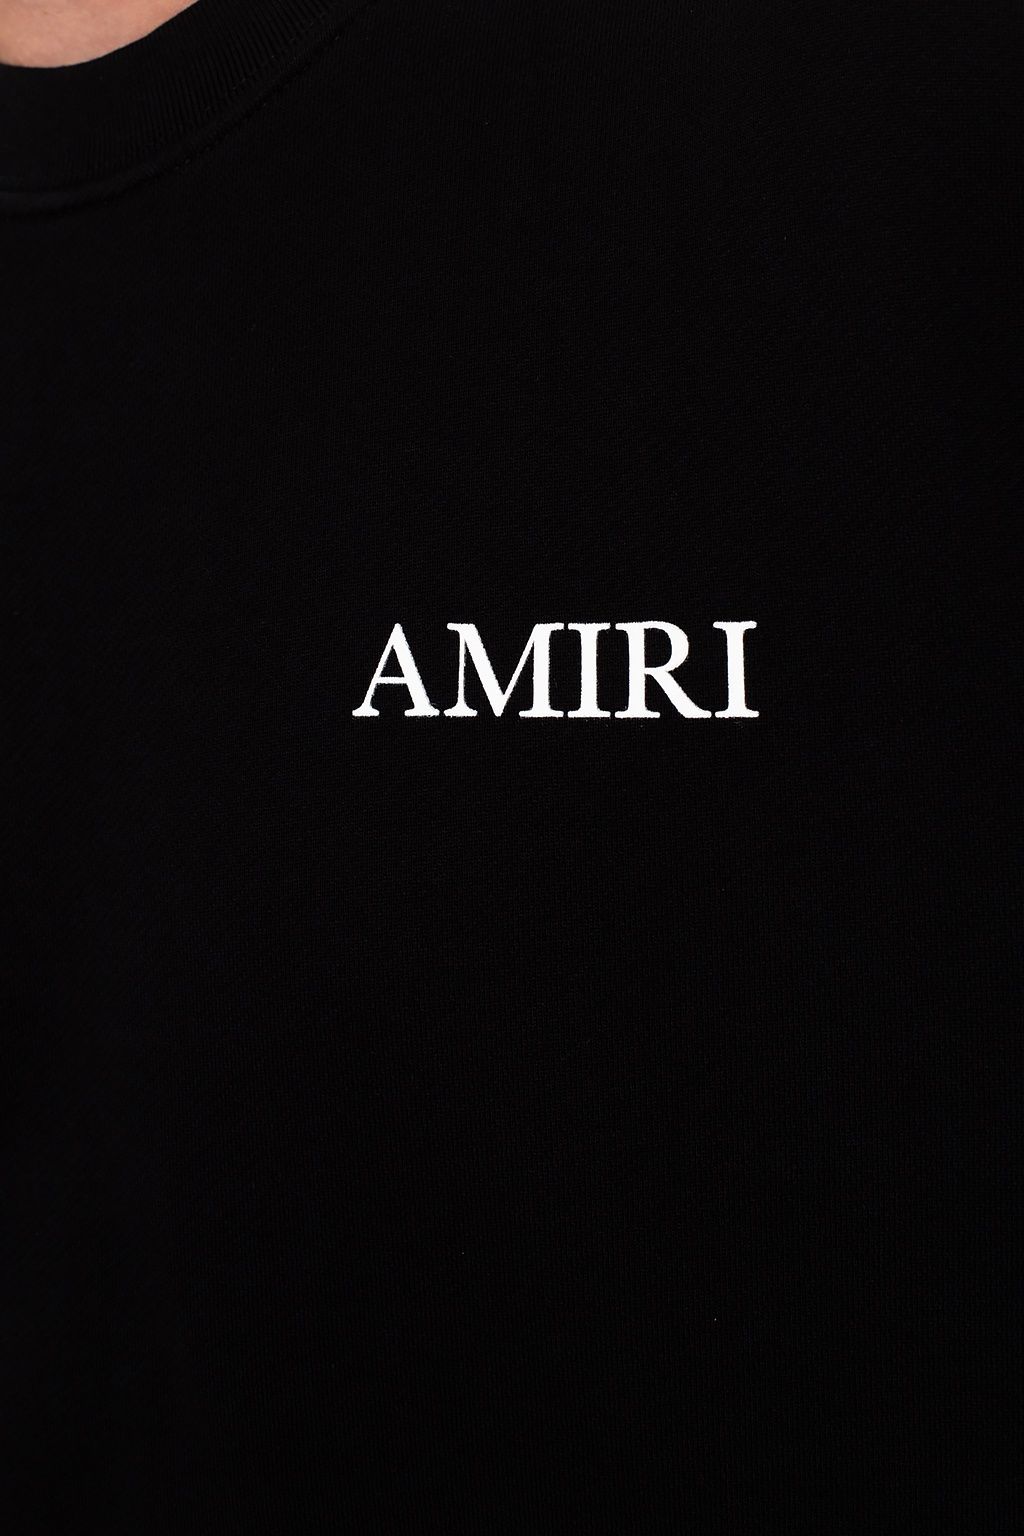 Amiri Wallpapers - Top Free Amiri Backgrounds - WallpaperAccess